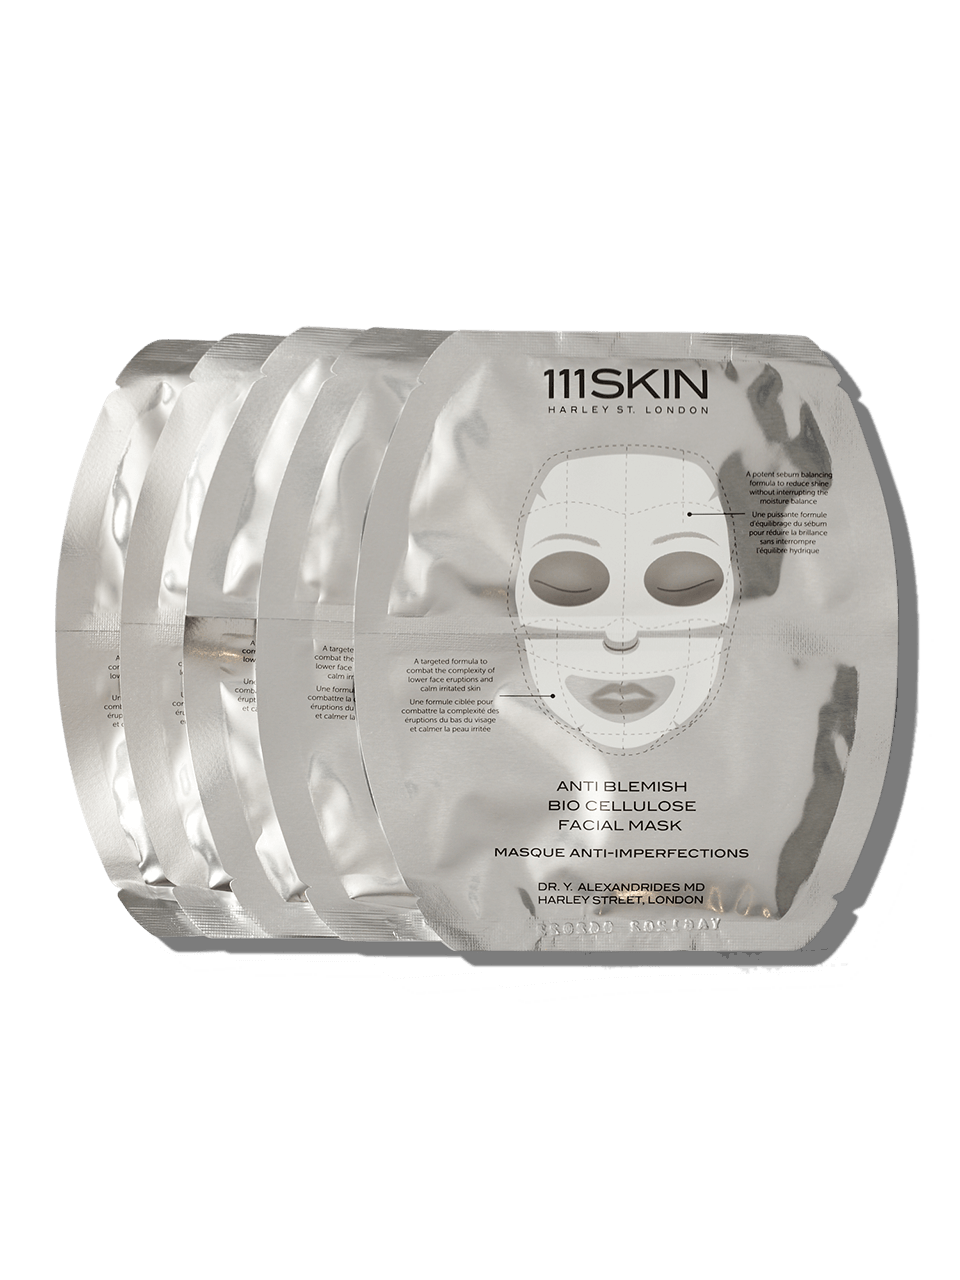 Anti Blemish Bio Cellulose Facial Mask SKINCARE 111Skin 